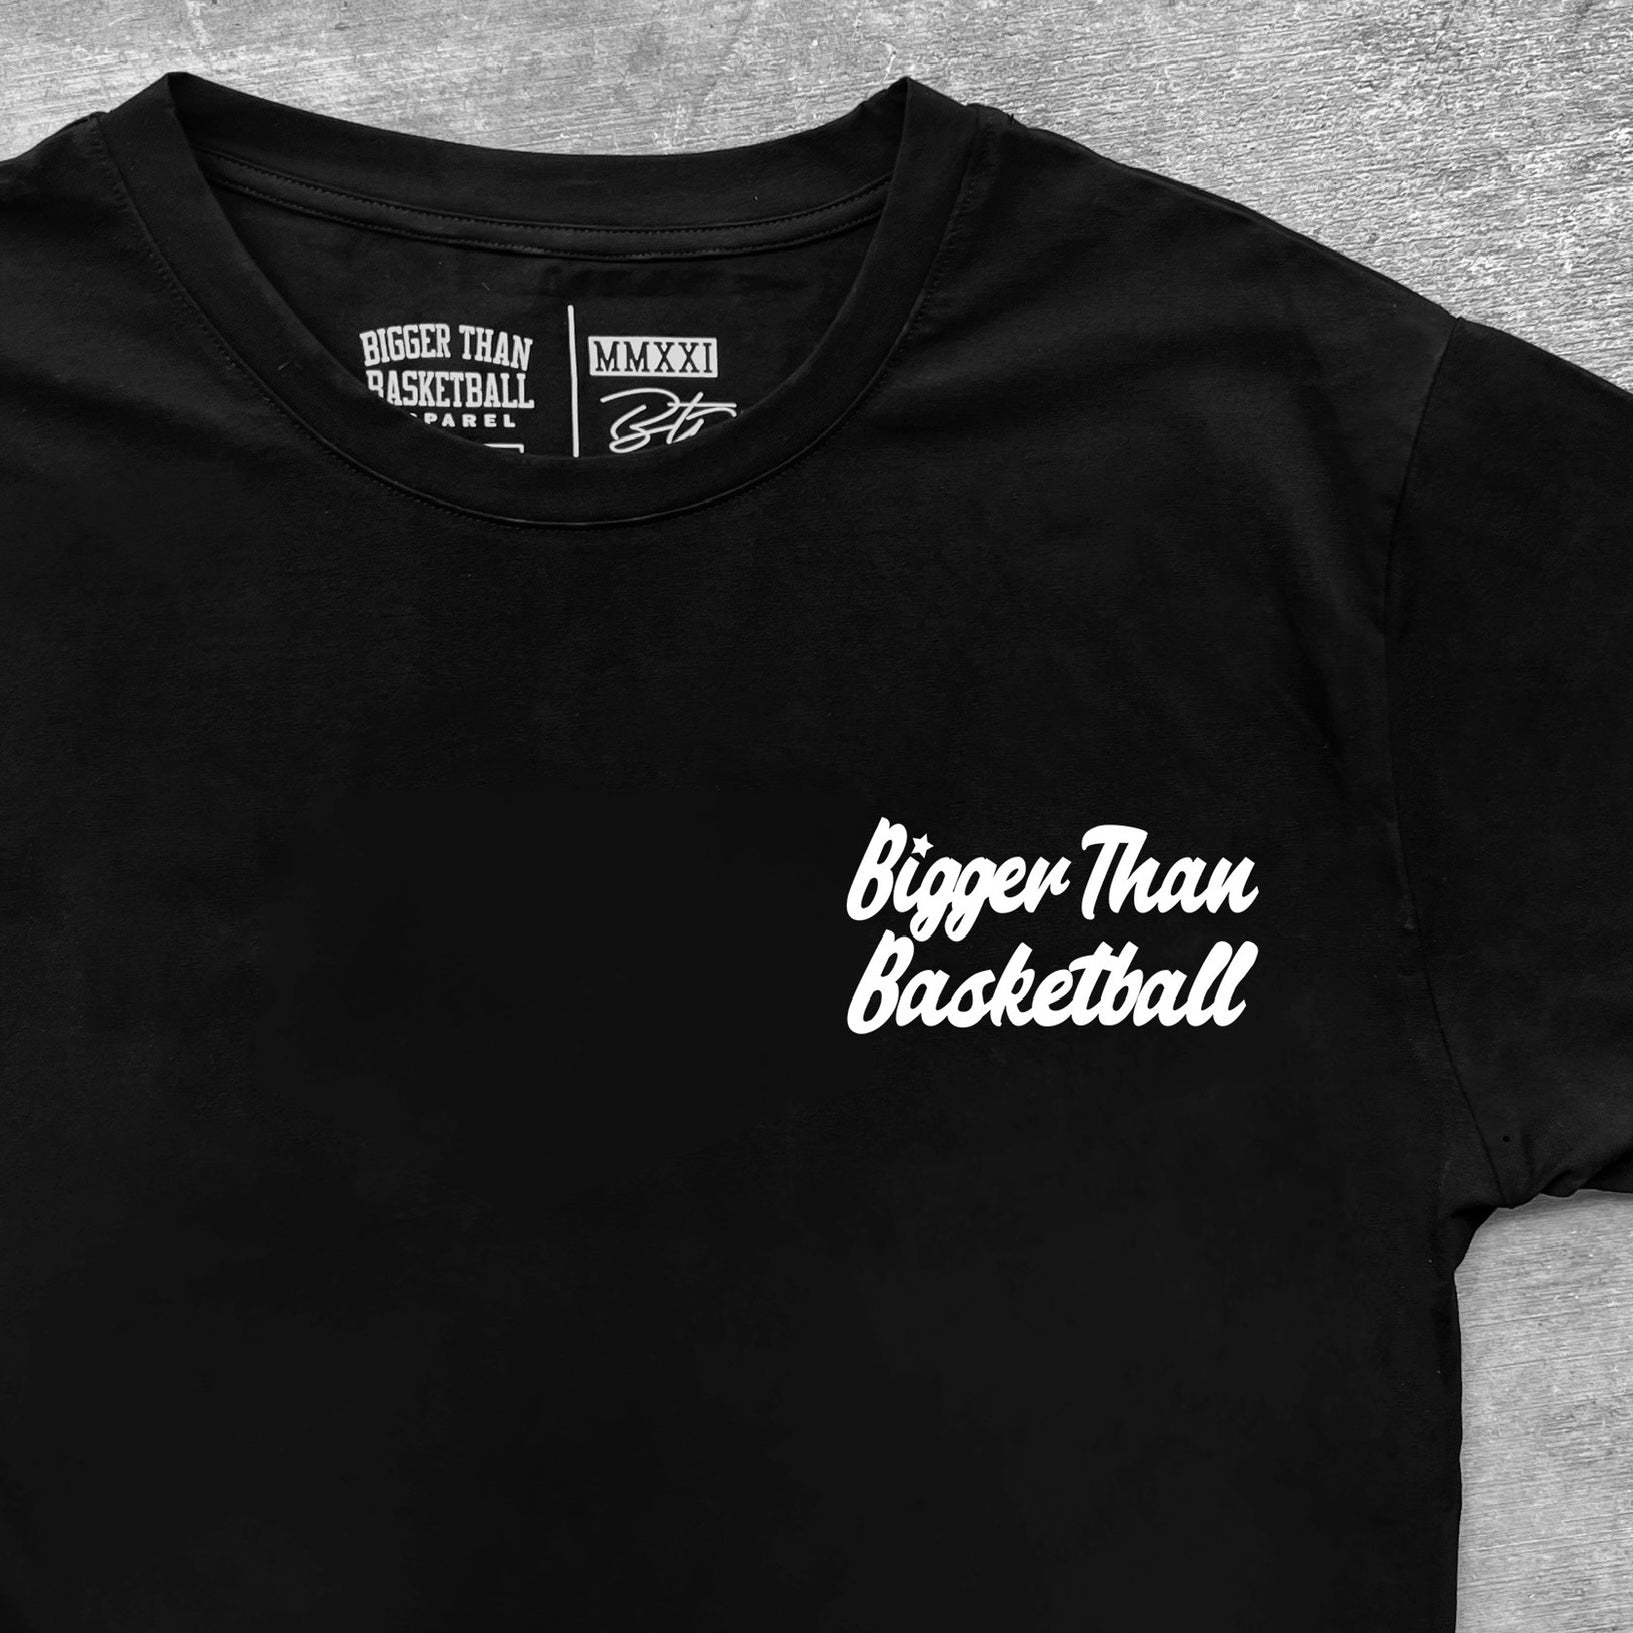 BTB Signature T-Shirt - Black